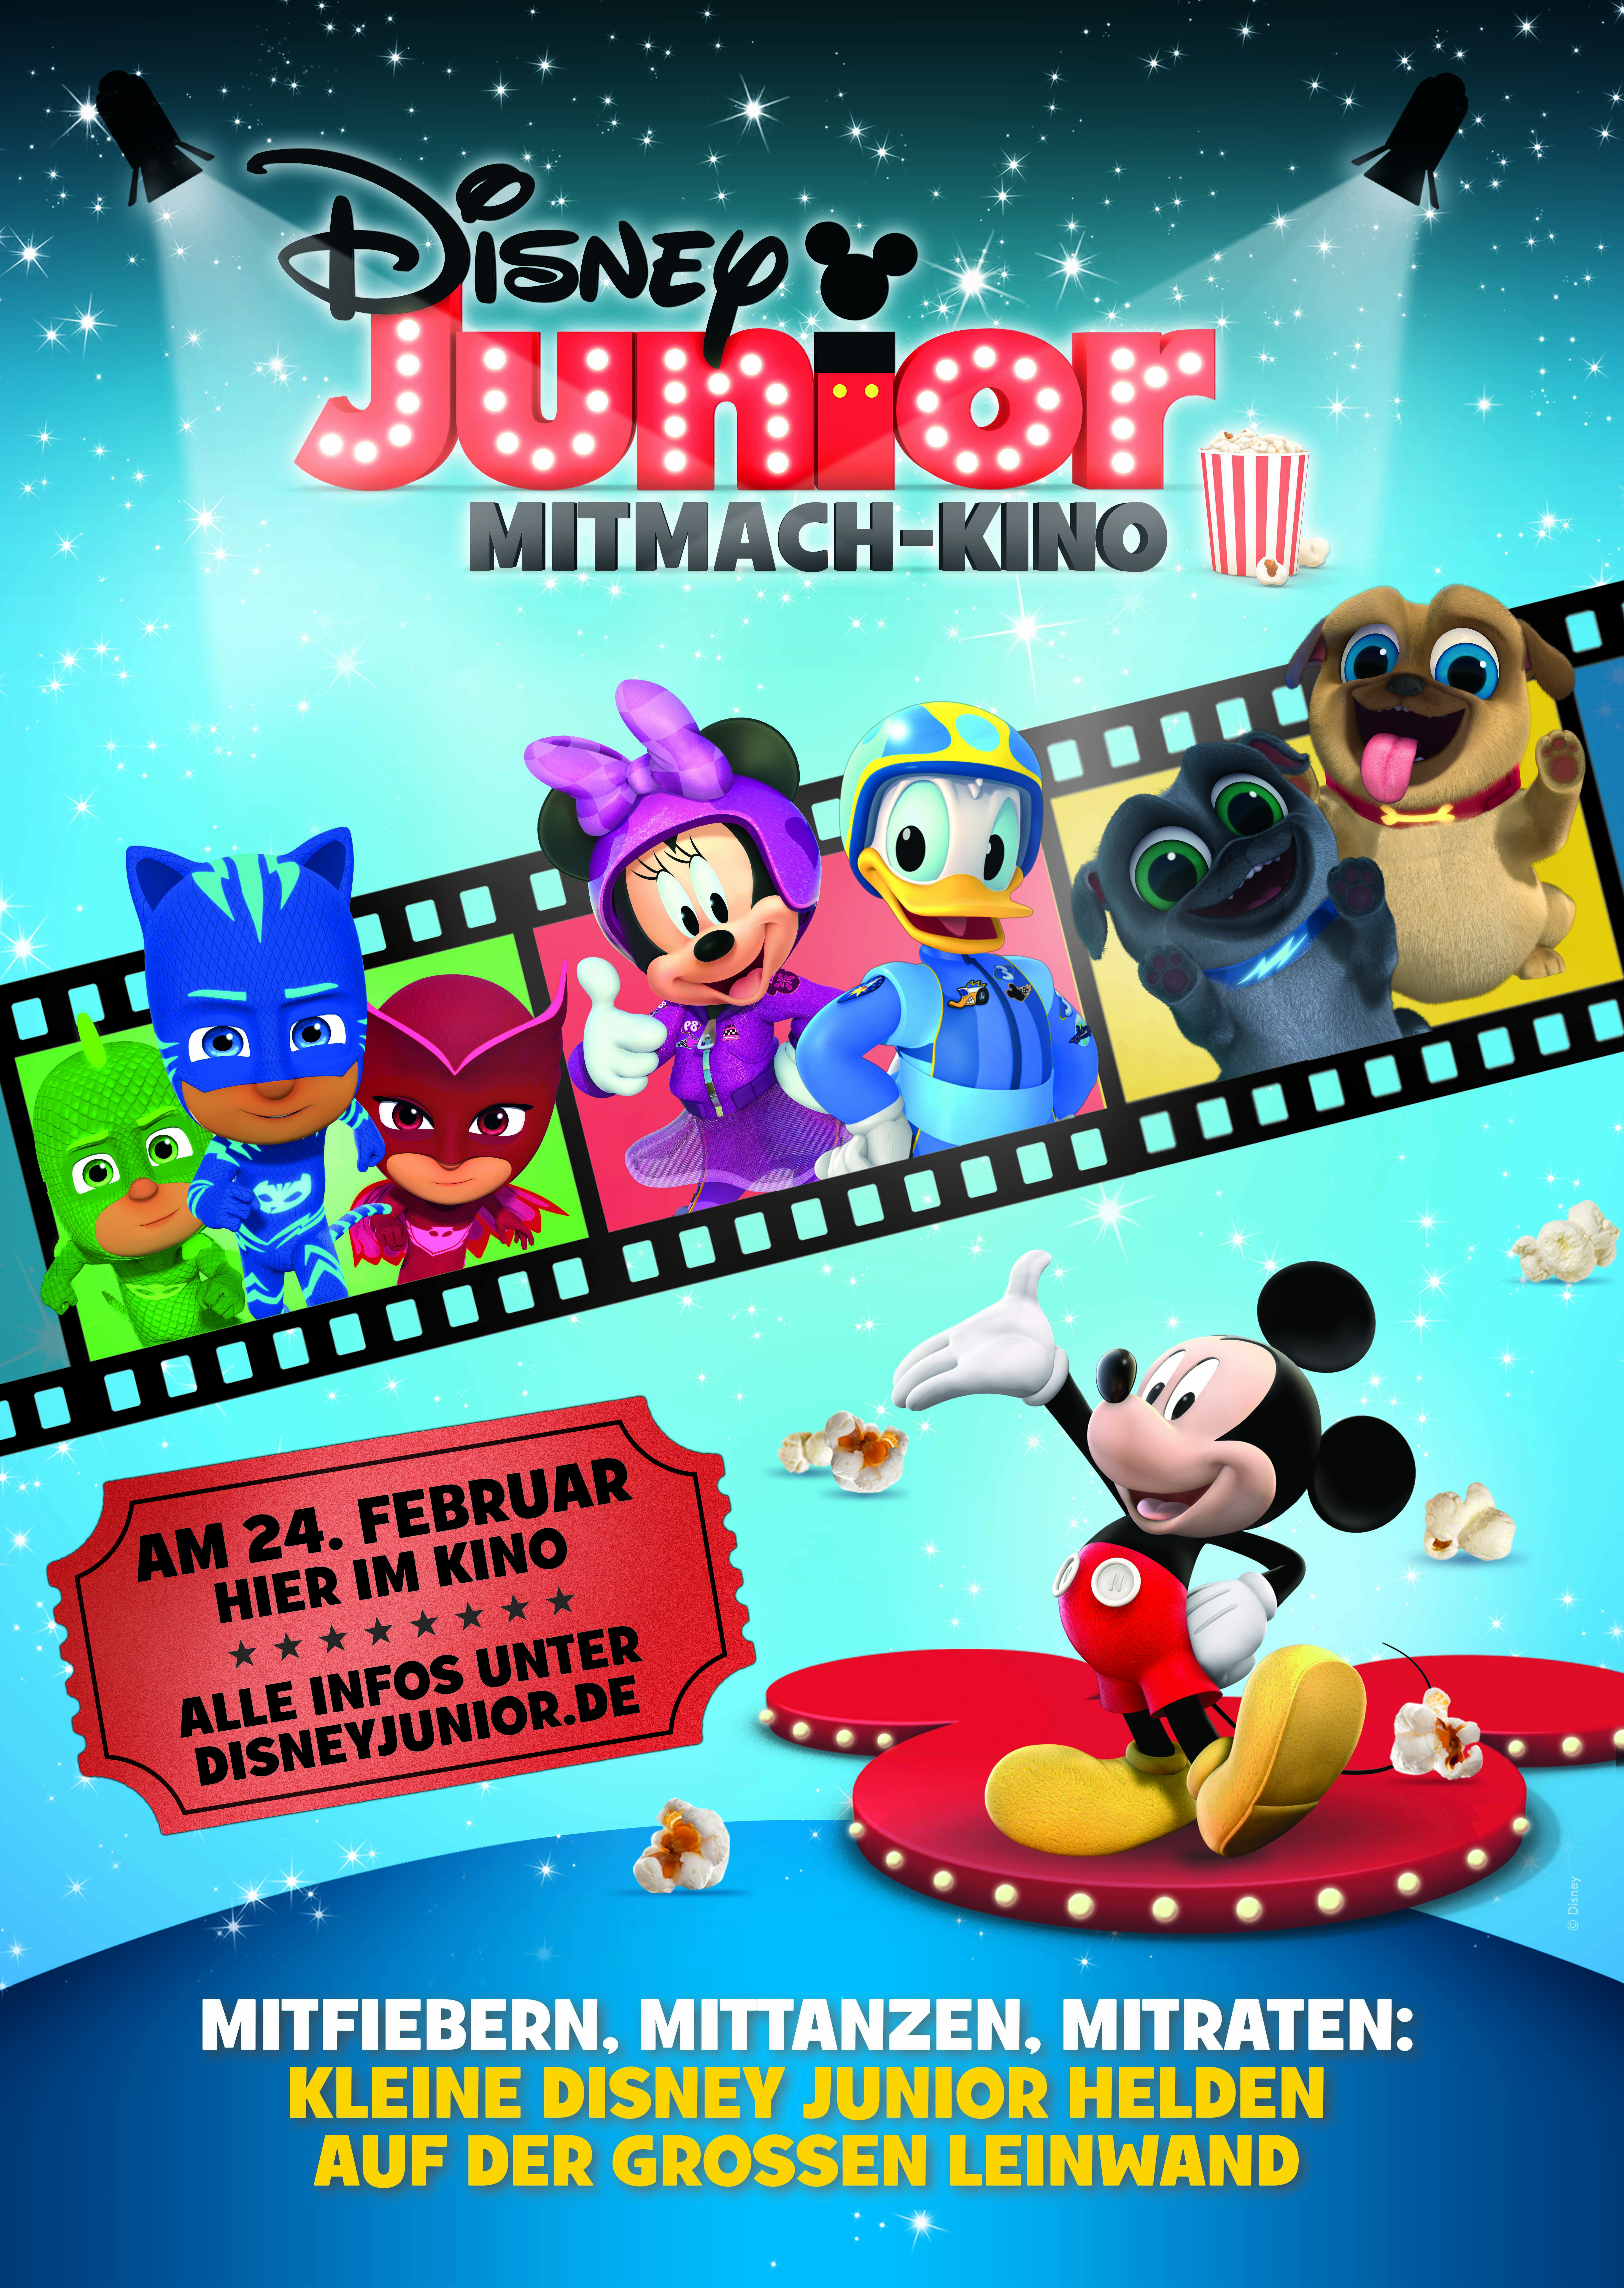 Disney Junior Mitmachkino 2019